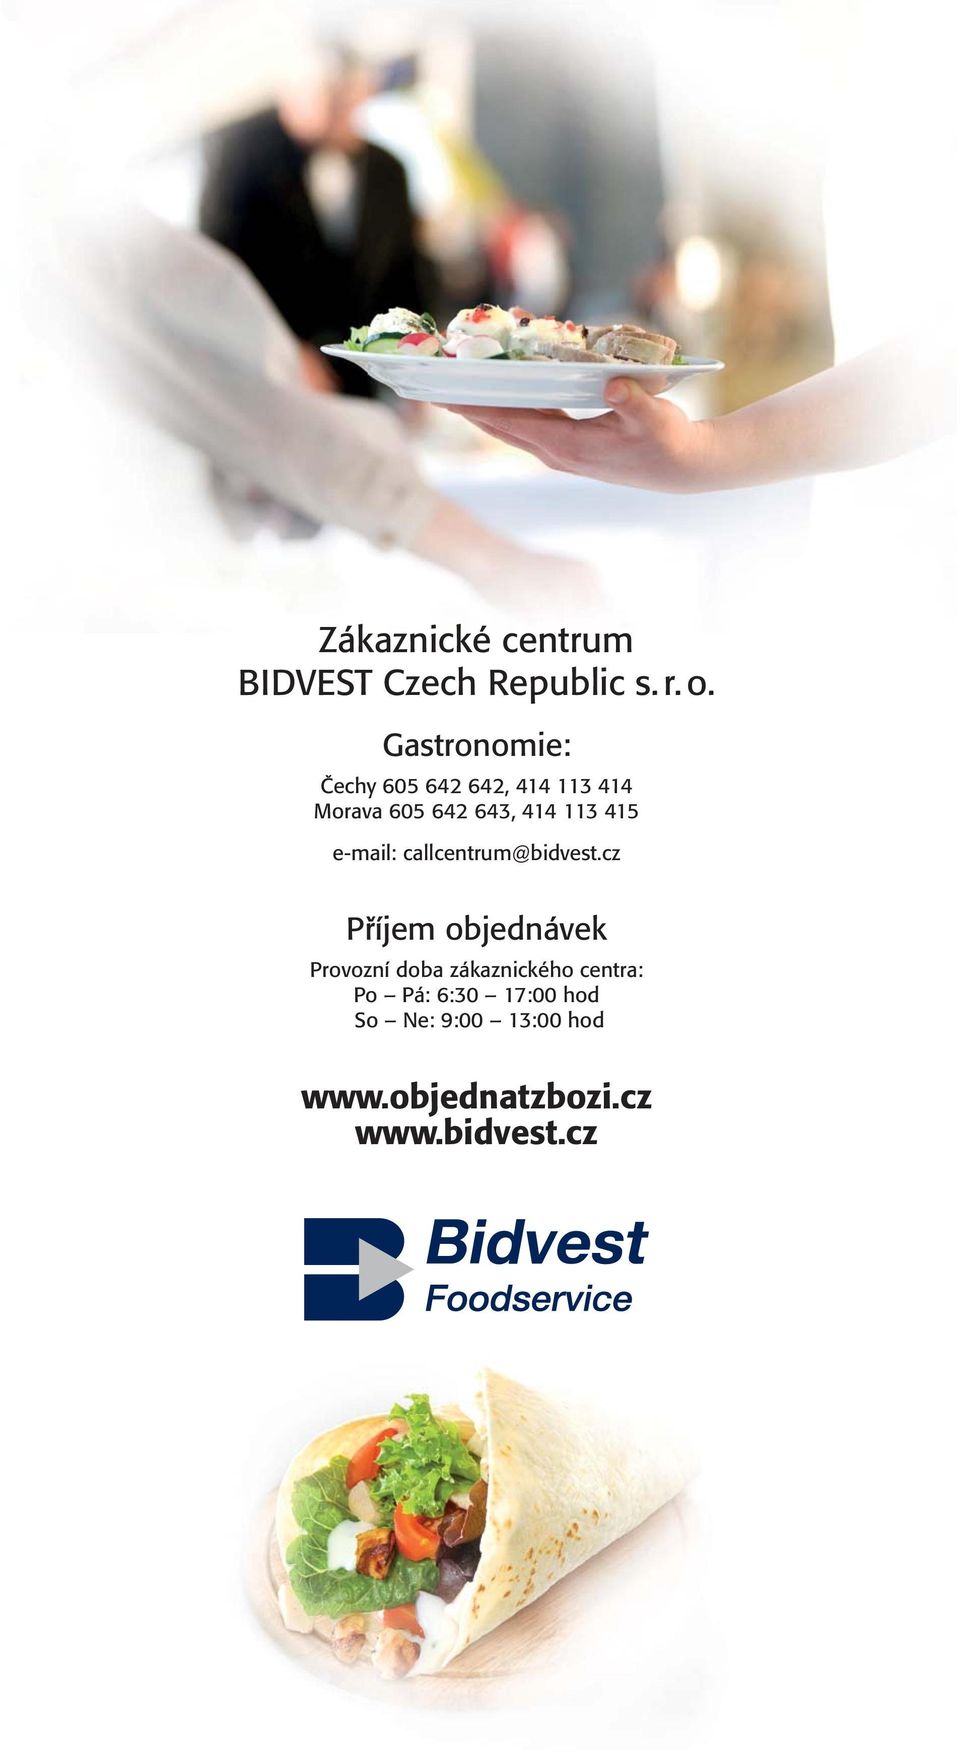 415 e-mail: callcentrum@bidvest.